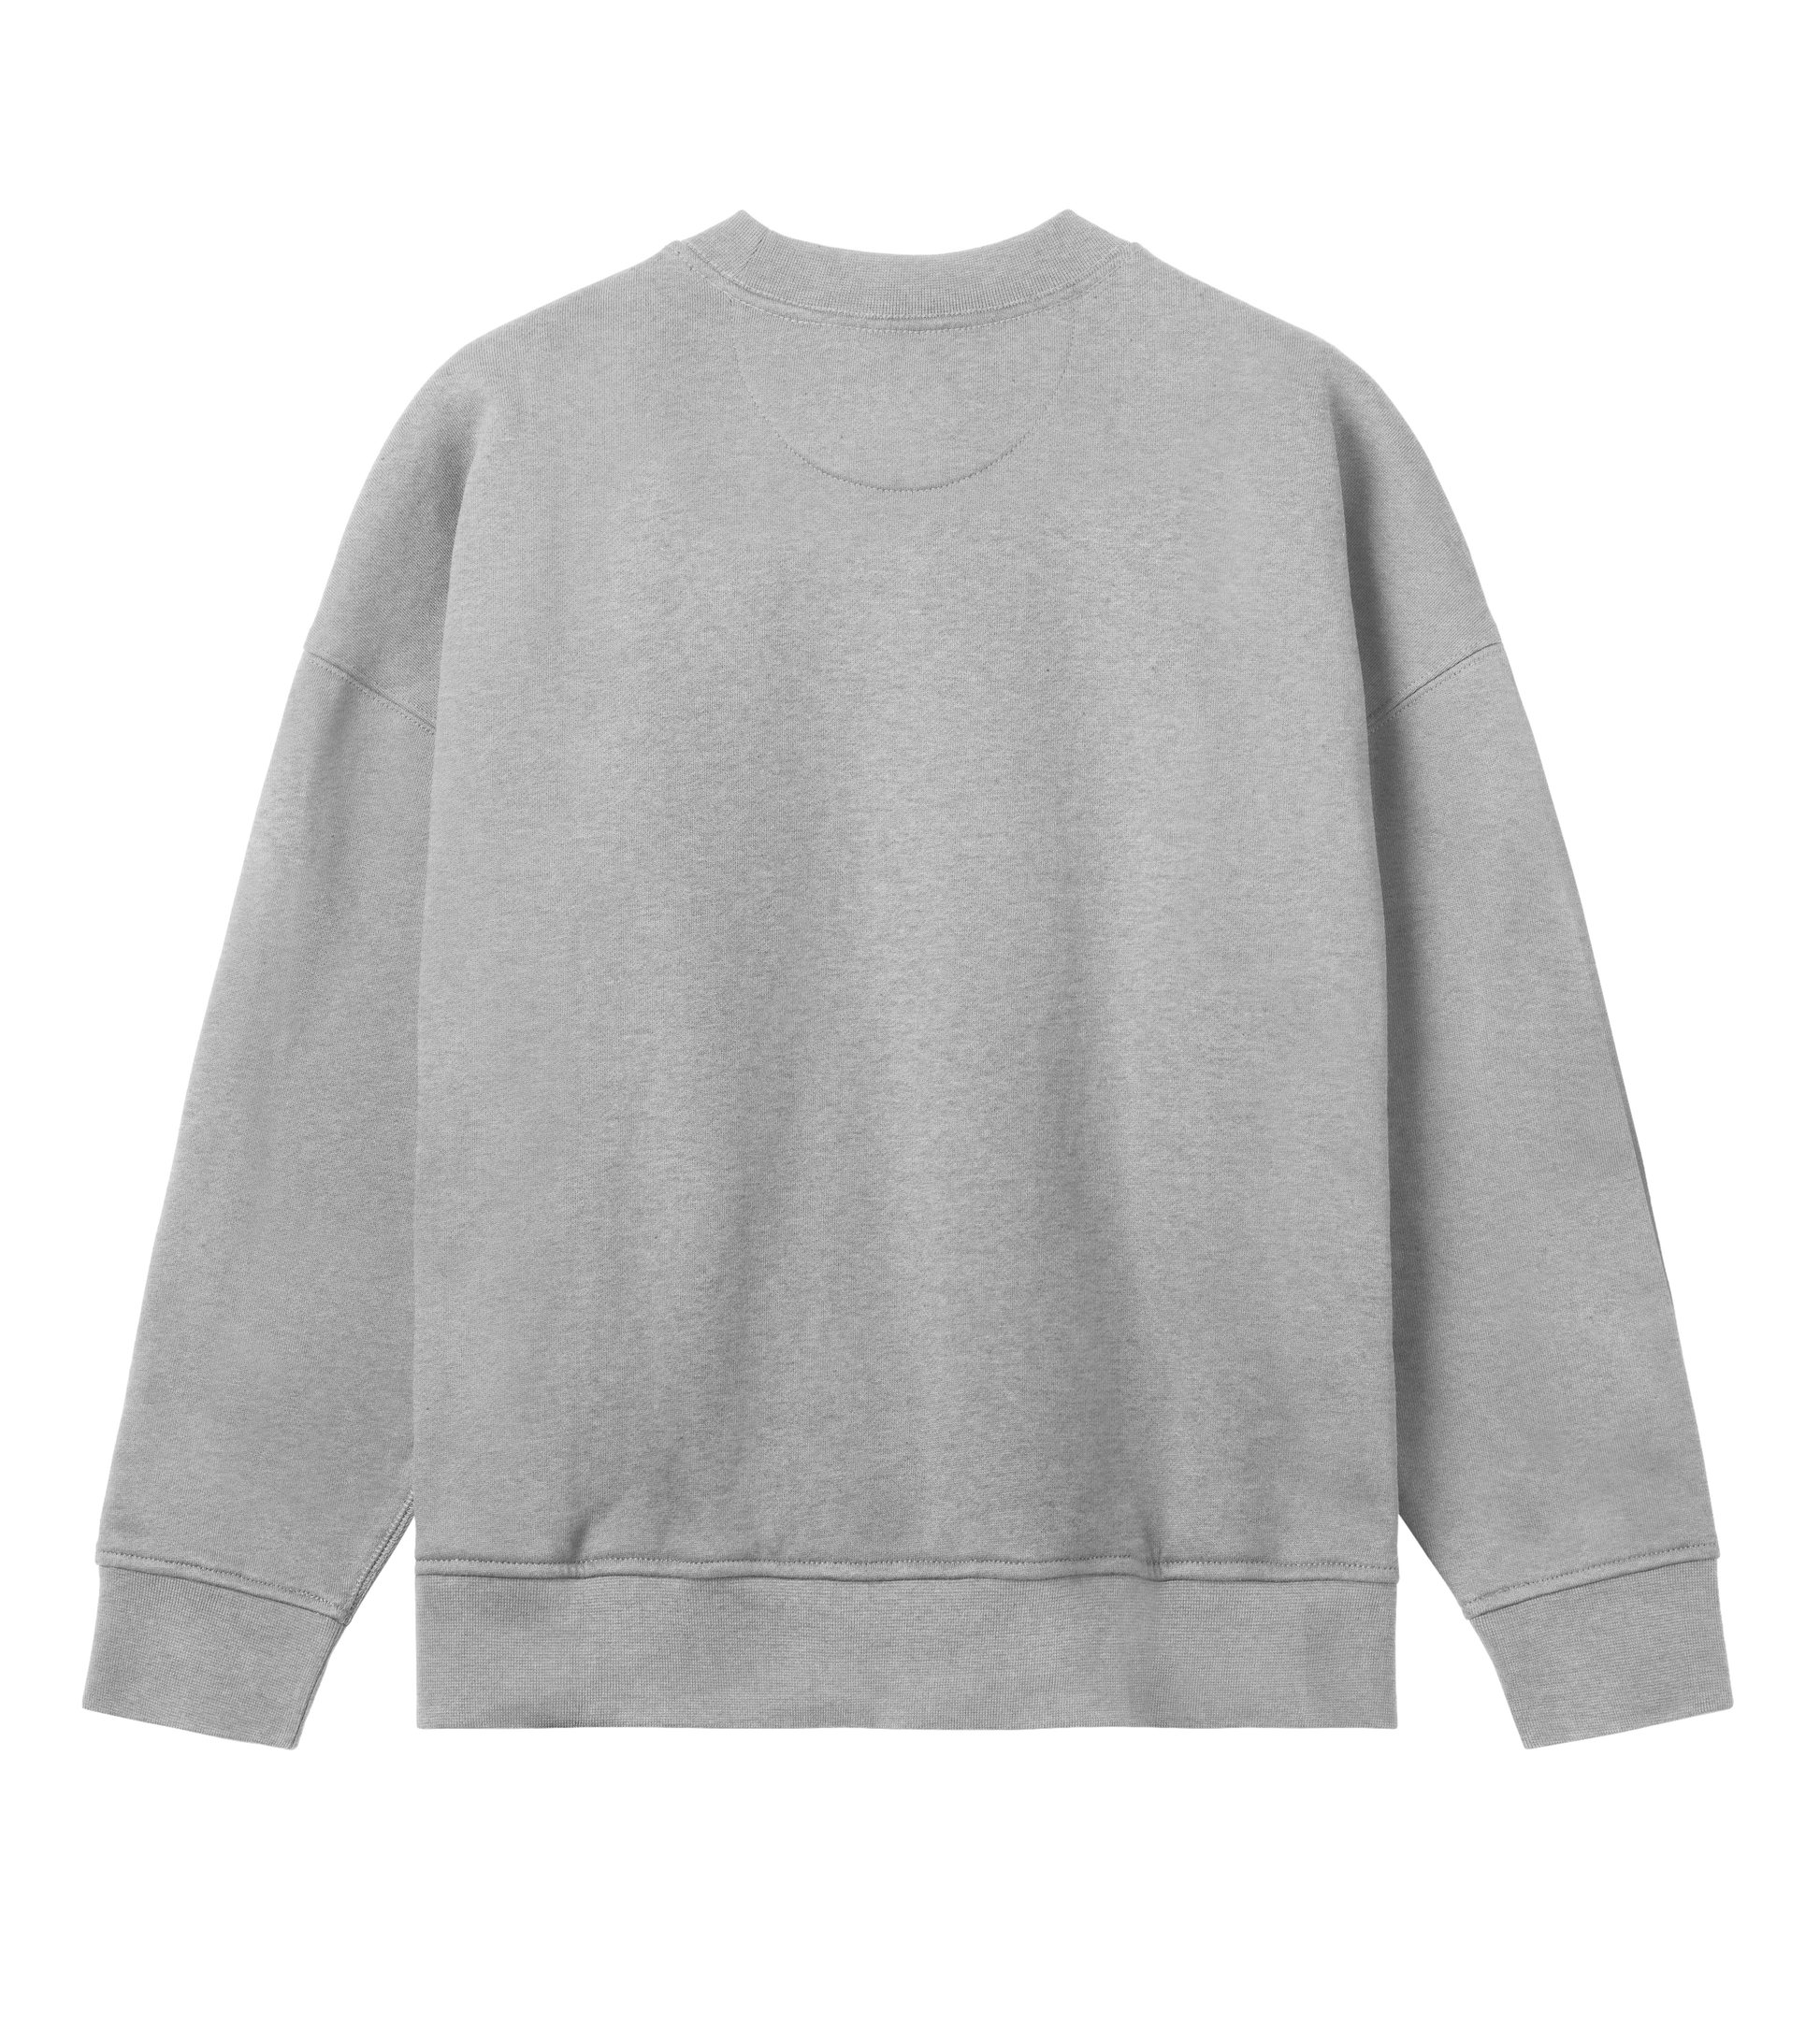 Women's Boxy Sweatshirt with Golden Triangle Symbol